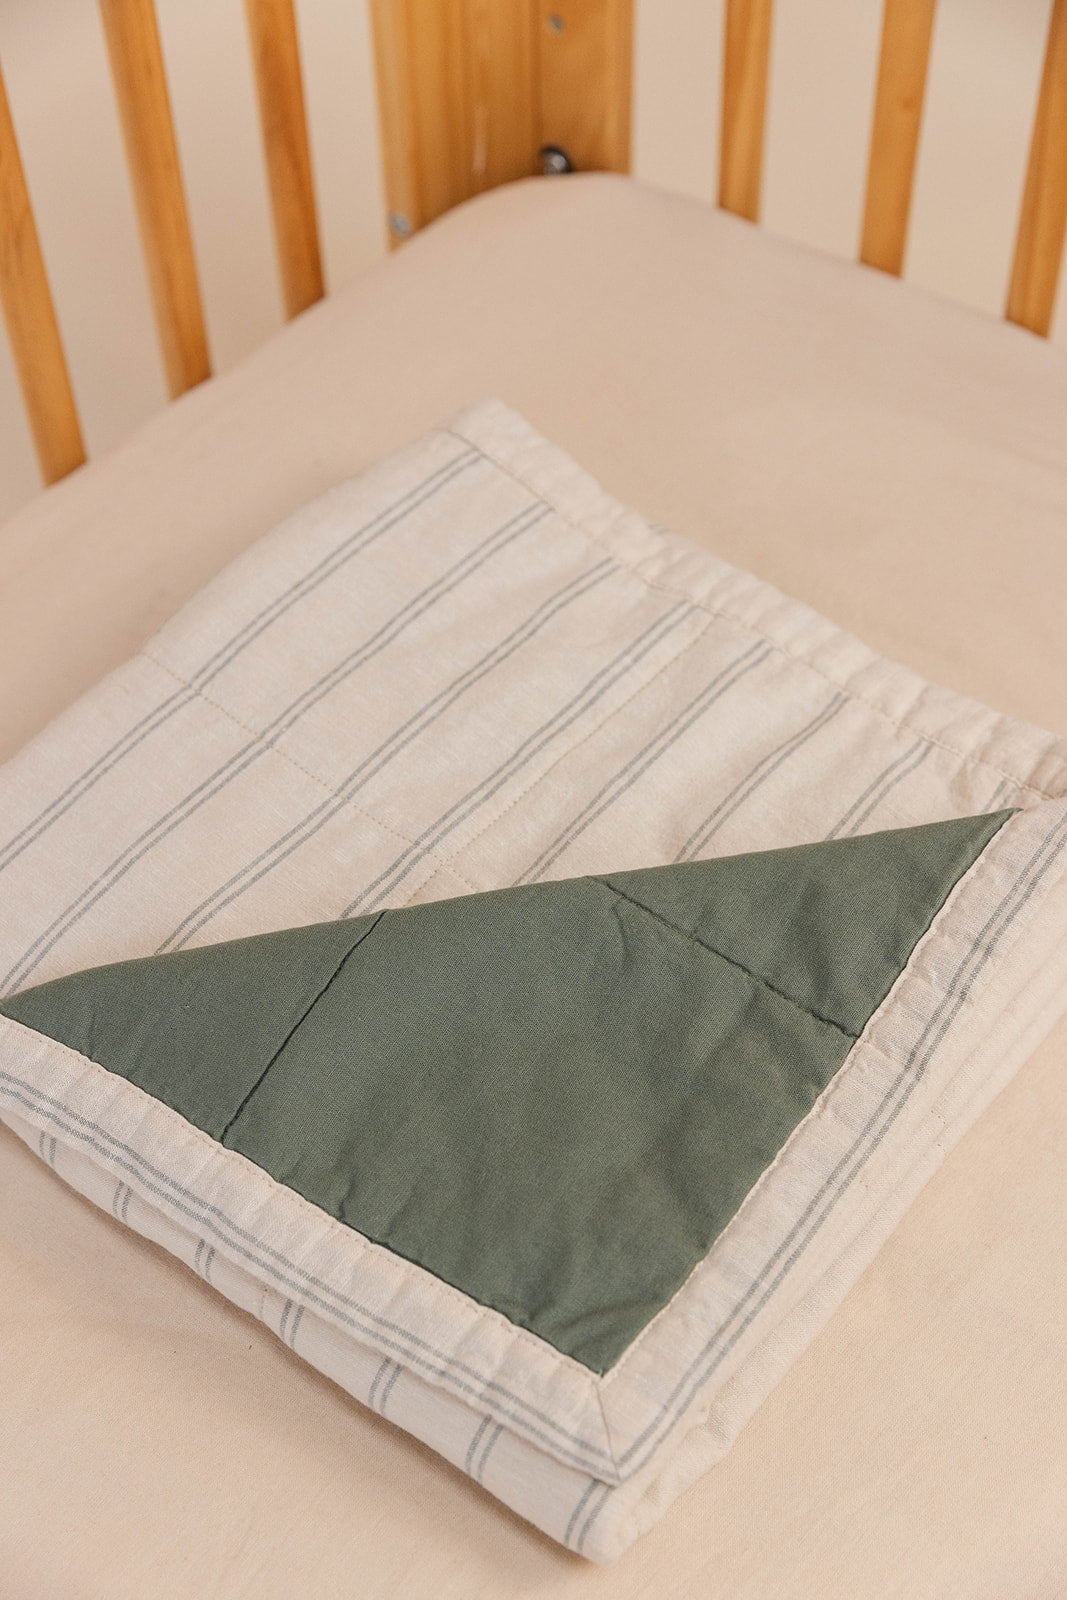 Tyrian/Acadian - Linen Quilted Blanket